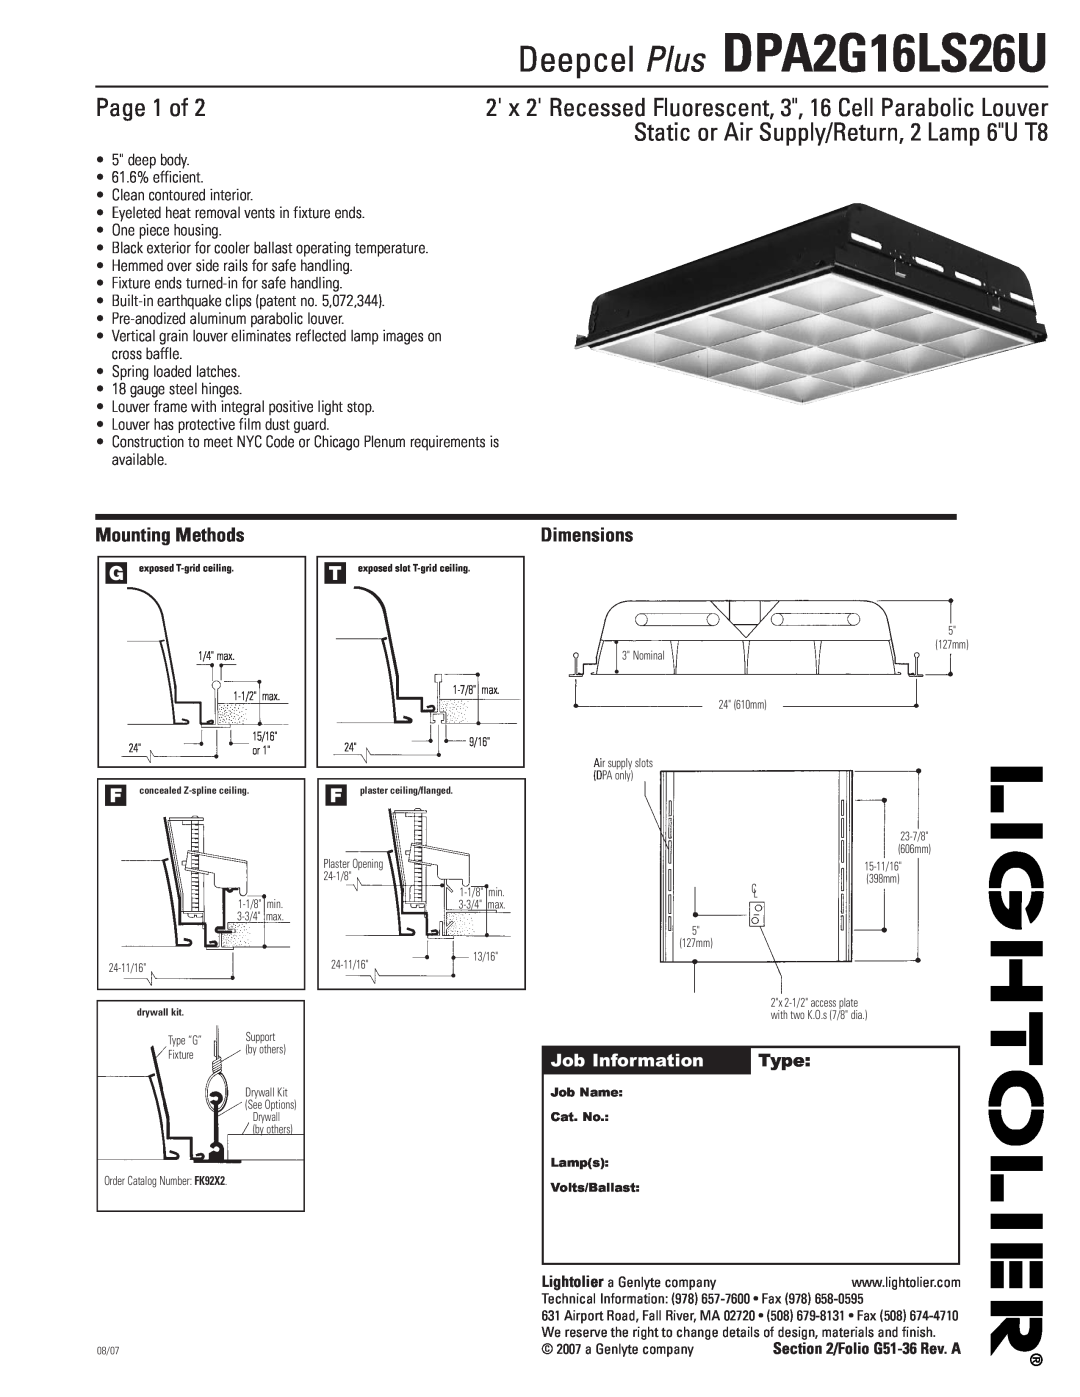 Lightolier dimensions Deepcel Plus DPA2G16LS26U, Page 1 of, Static or Air Supply/Return, 2 Lamp 6U T8, Mounting Methods 